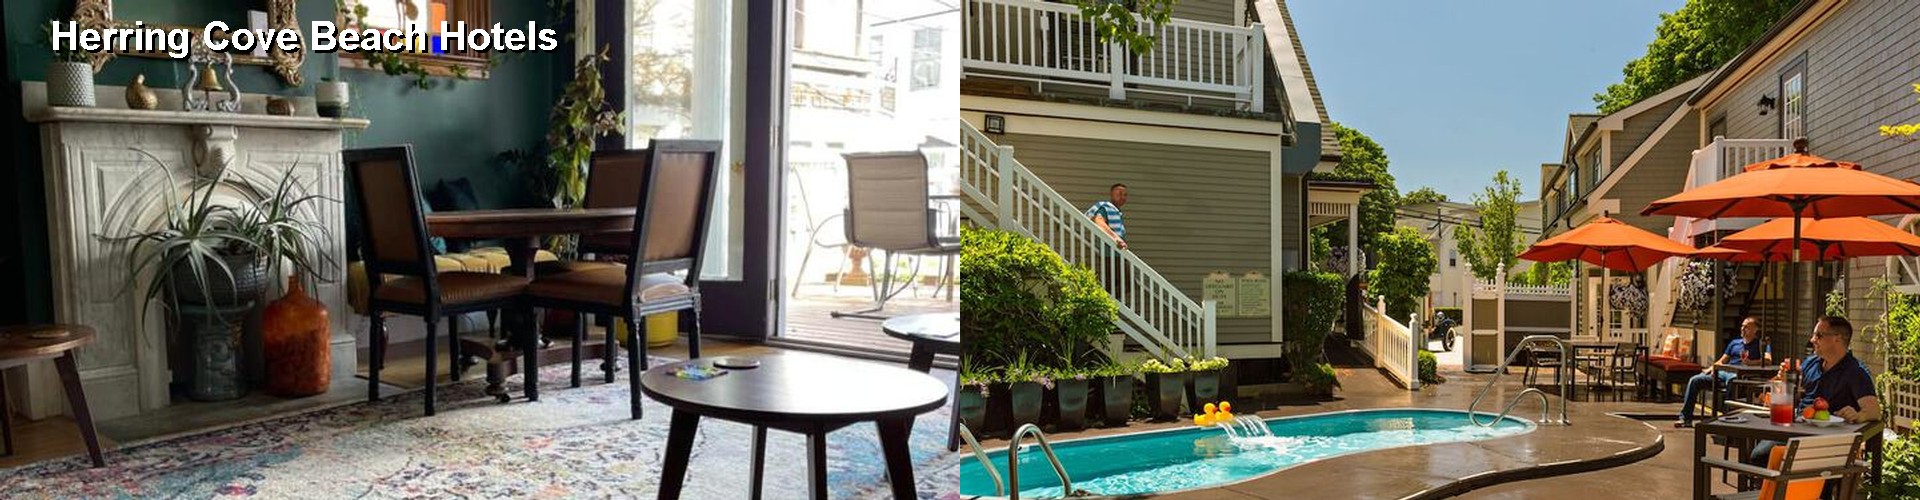 5 Best Hotels near Herring Cove Beach